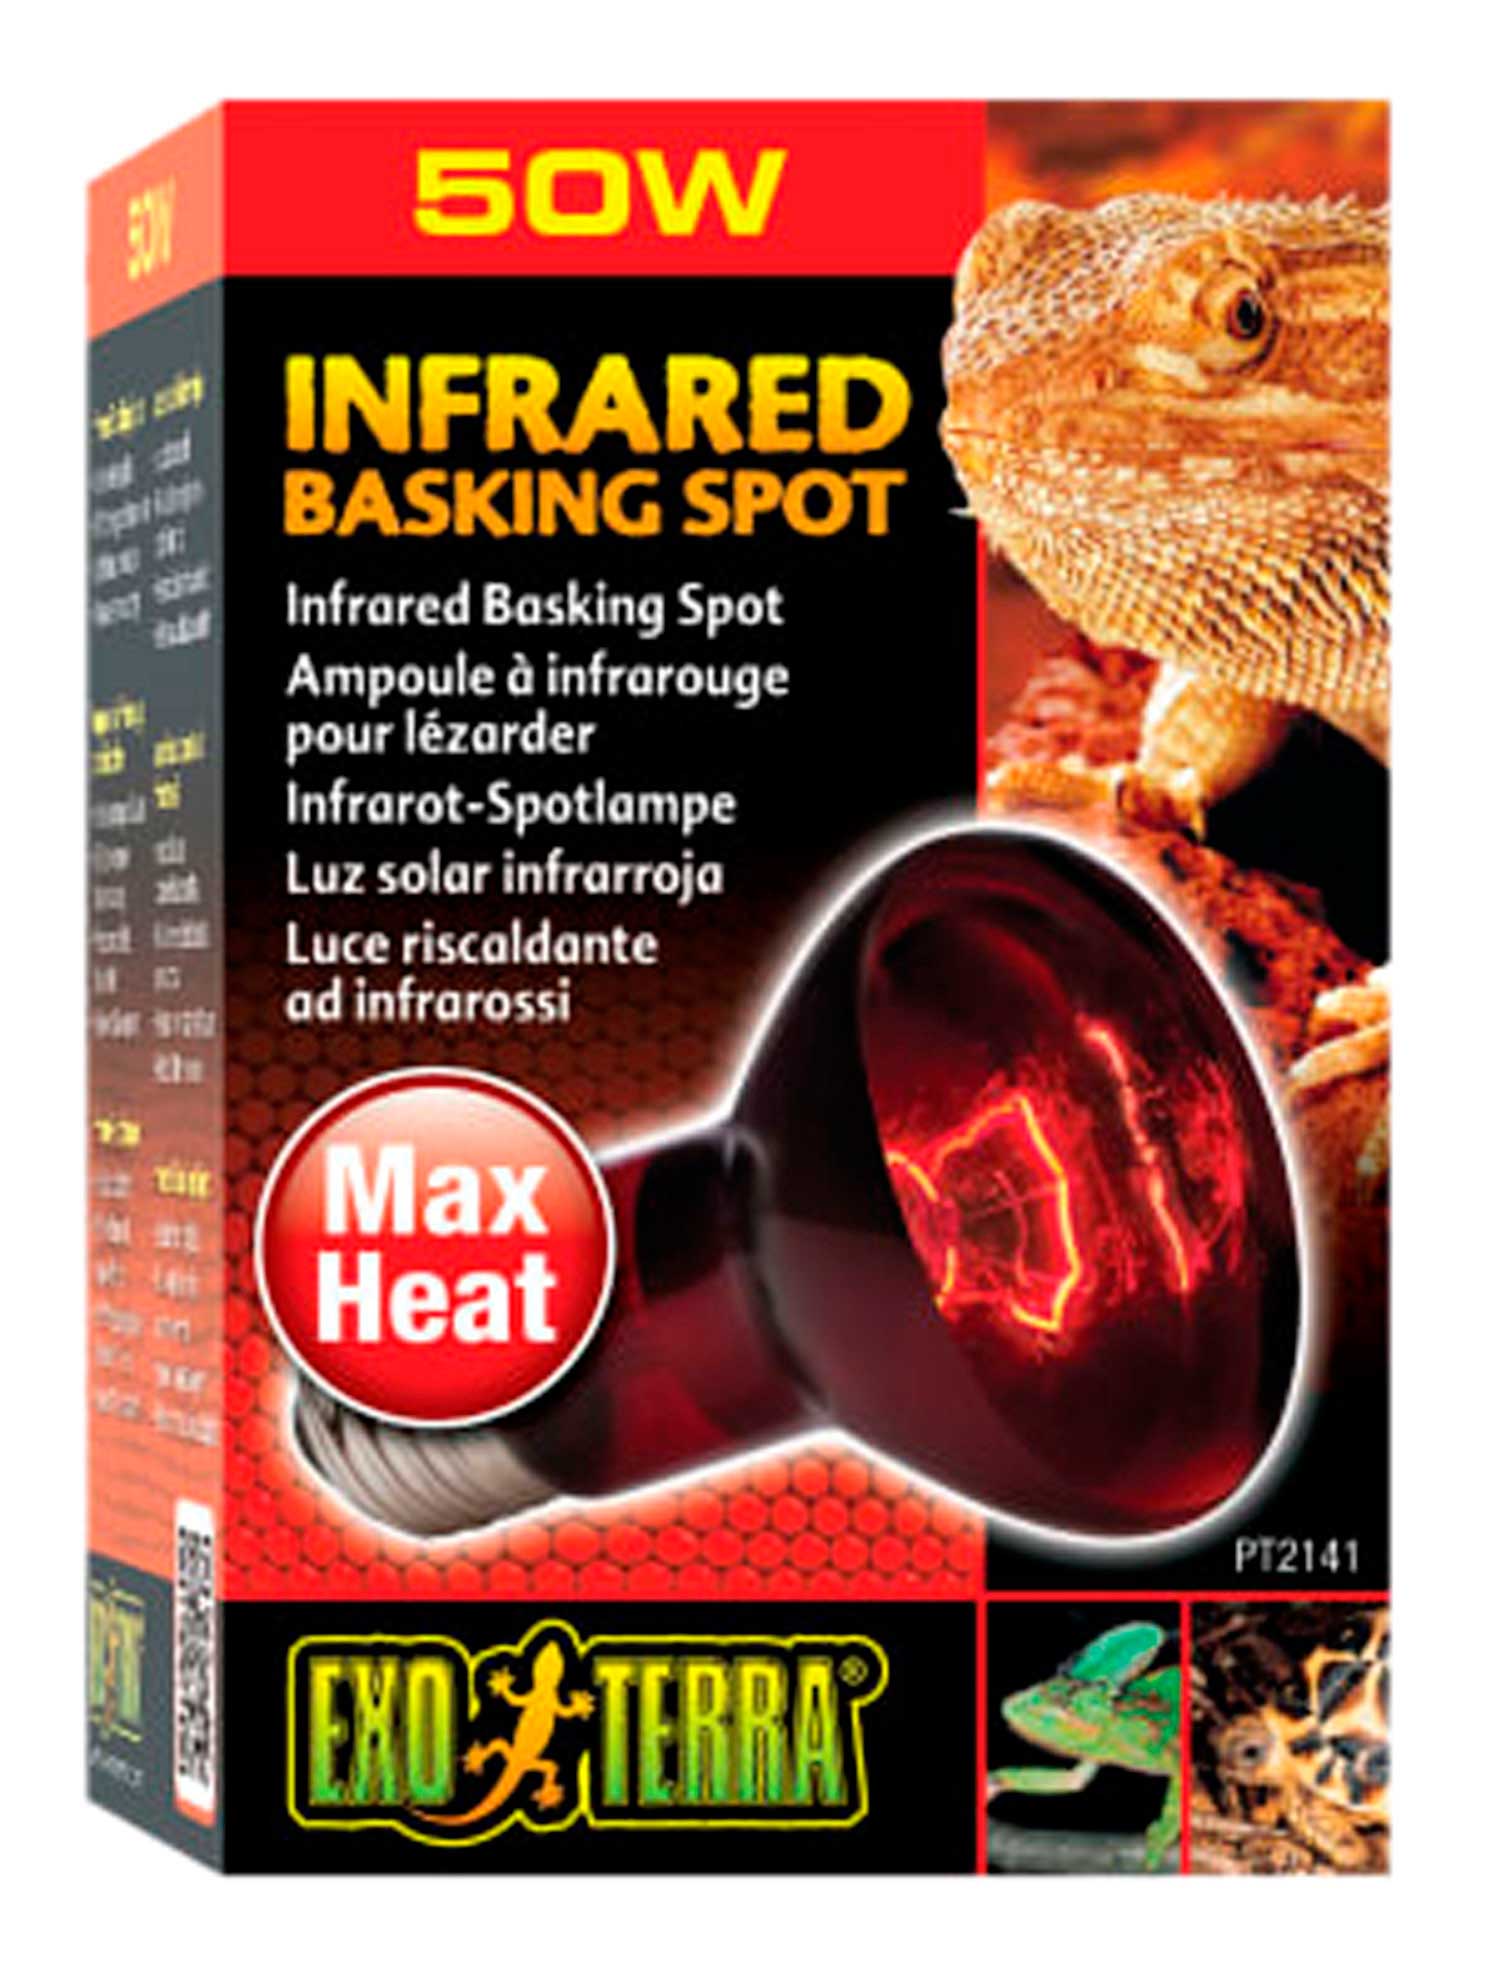 Exo Terra Reptile Heat/light Basking Infrared Spot 50w 1ea